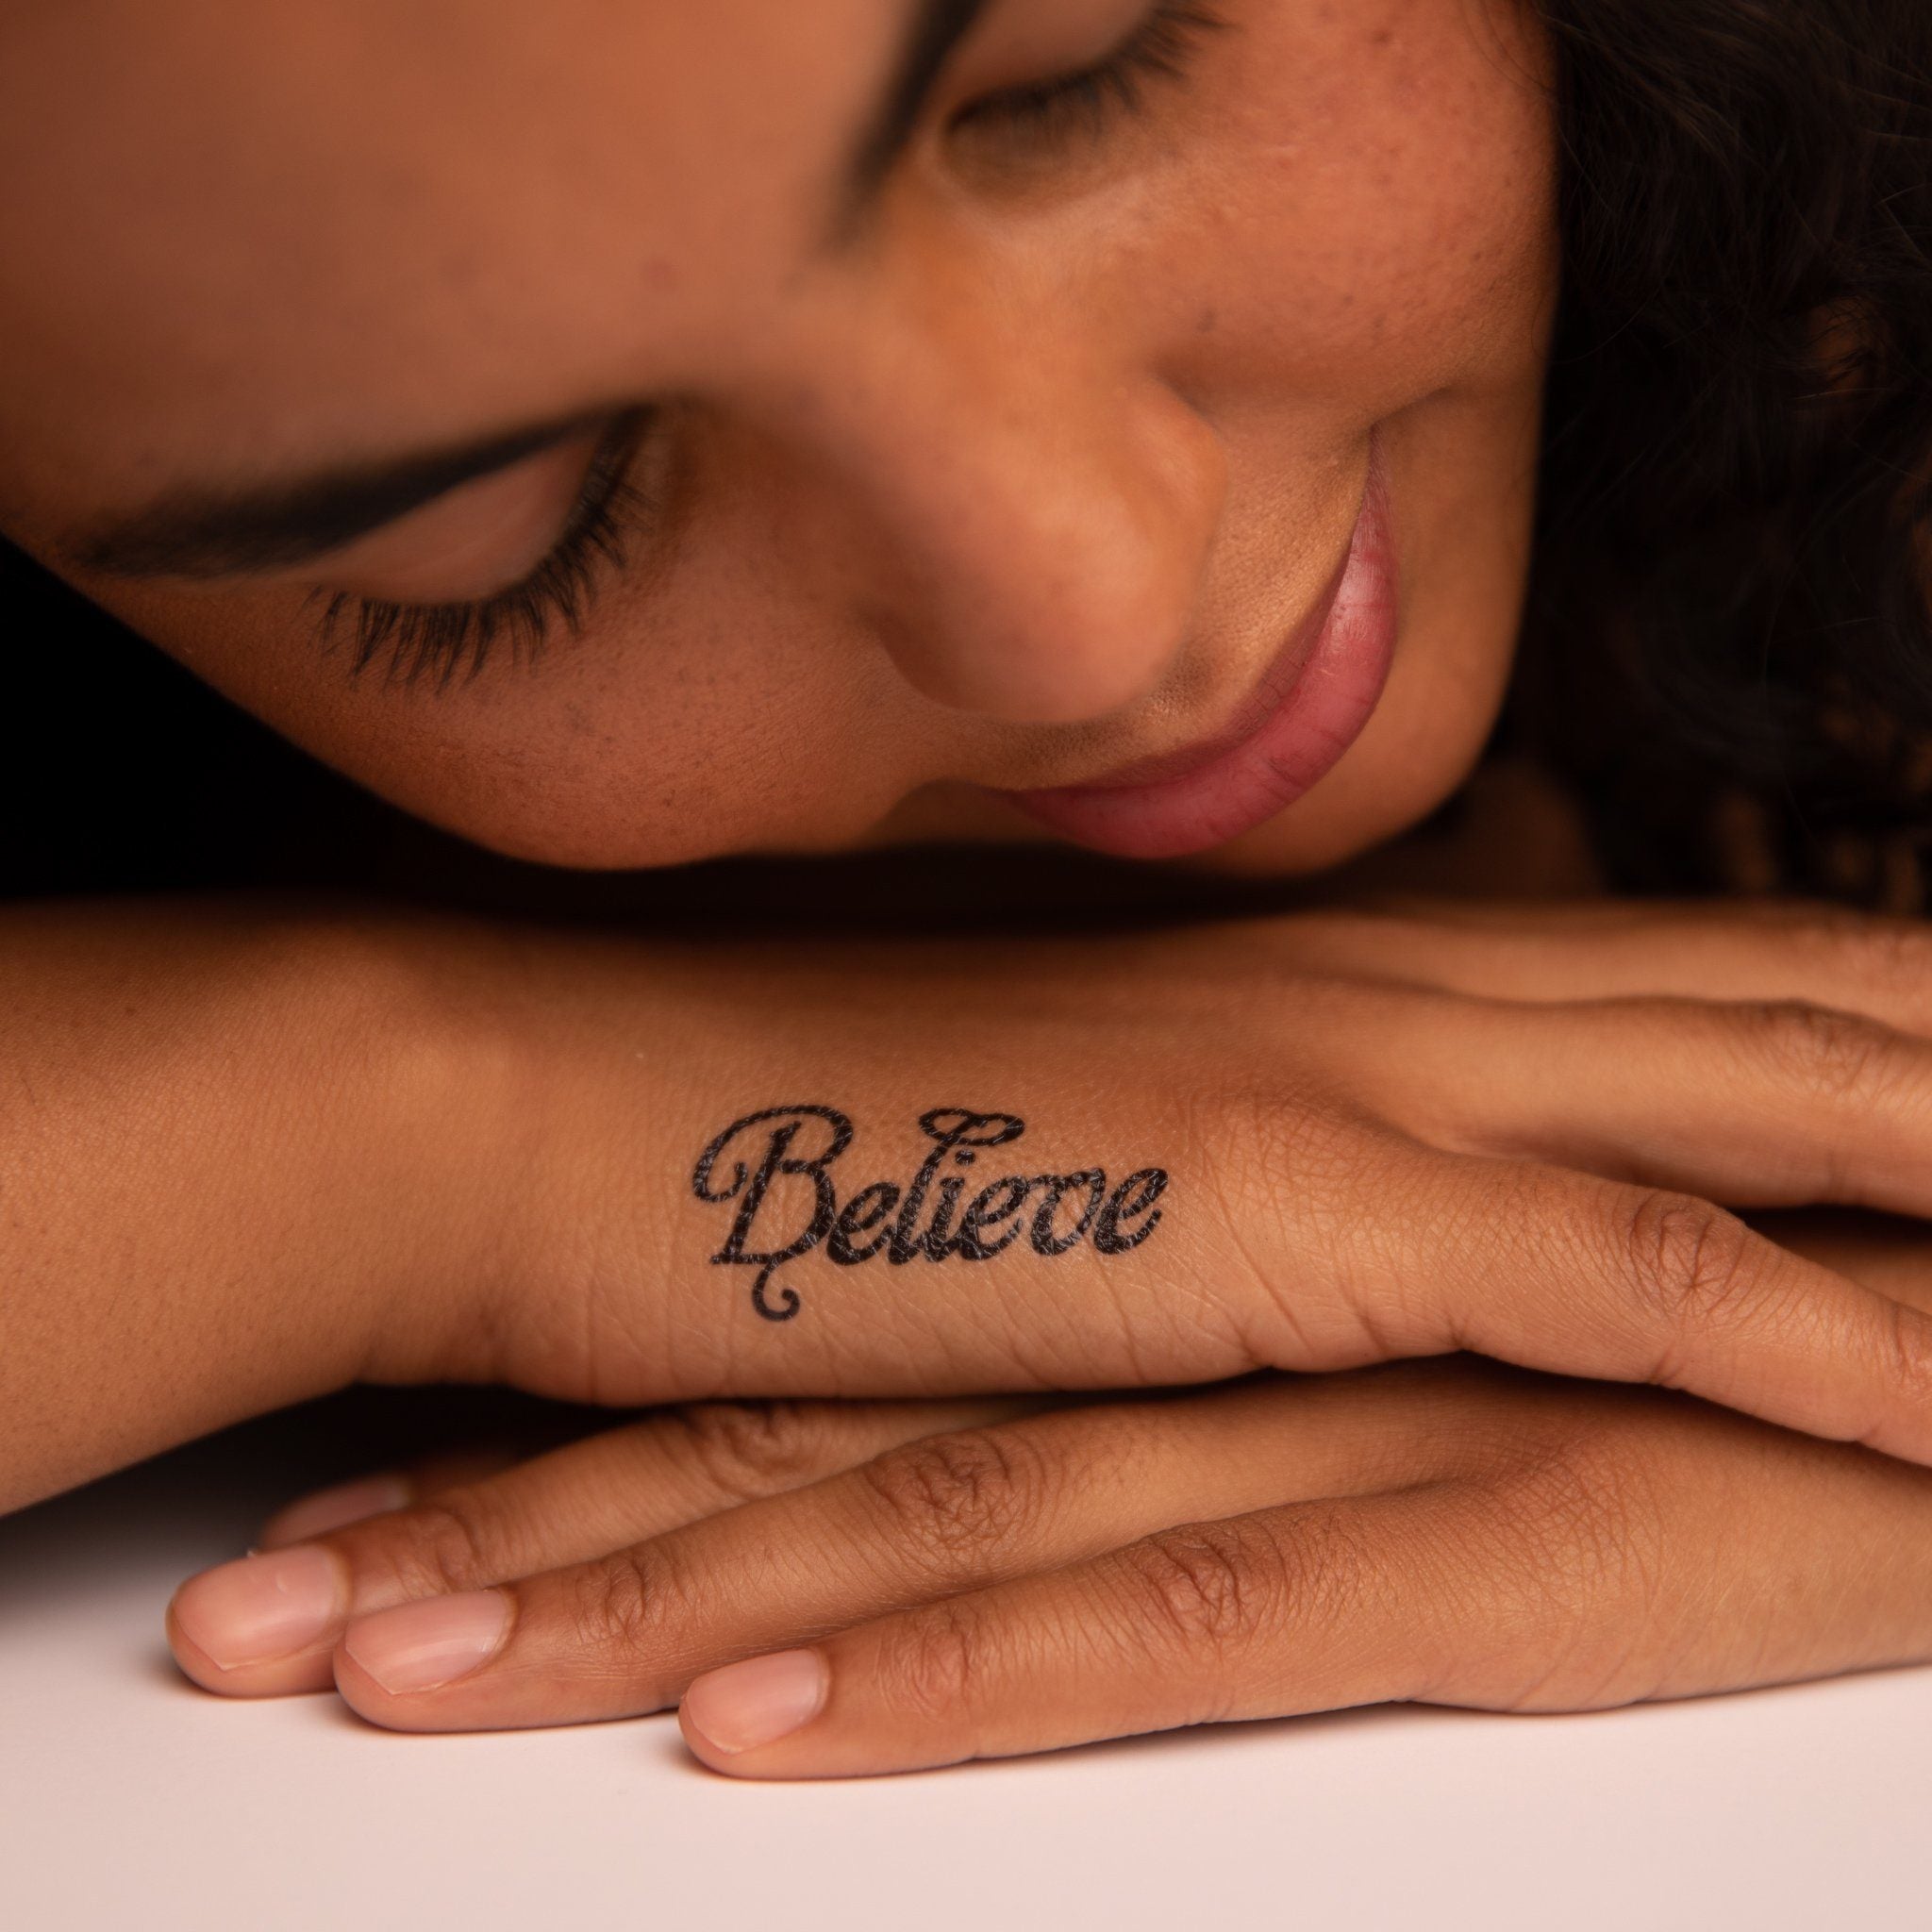 Believe Small Dove Tattoo On Left Wrist | Believe tattoos, Small wrist tattoos, Tattoos